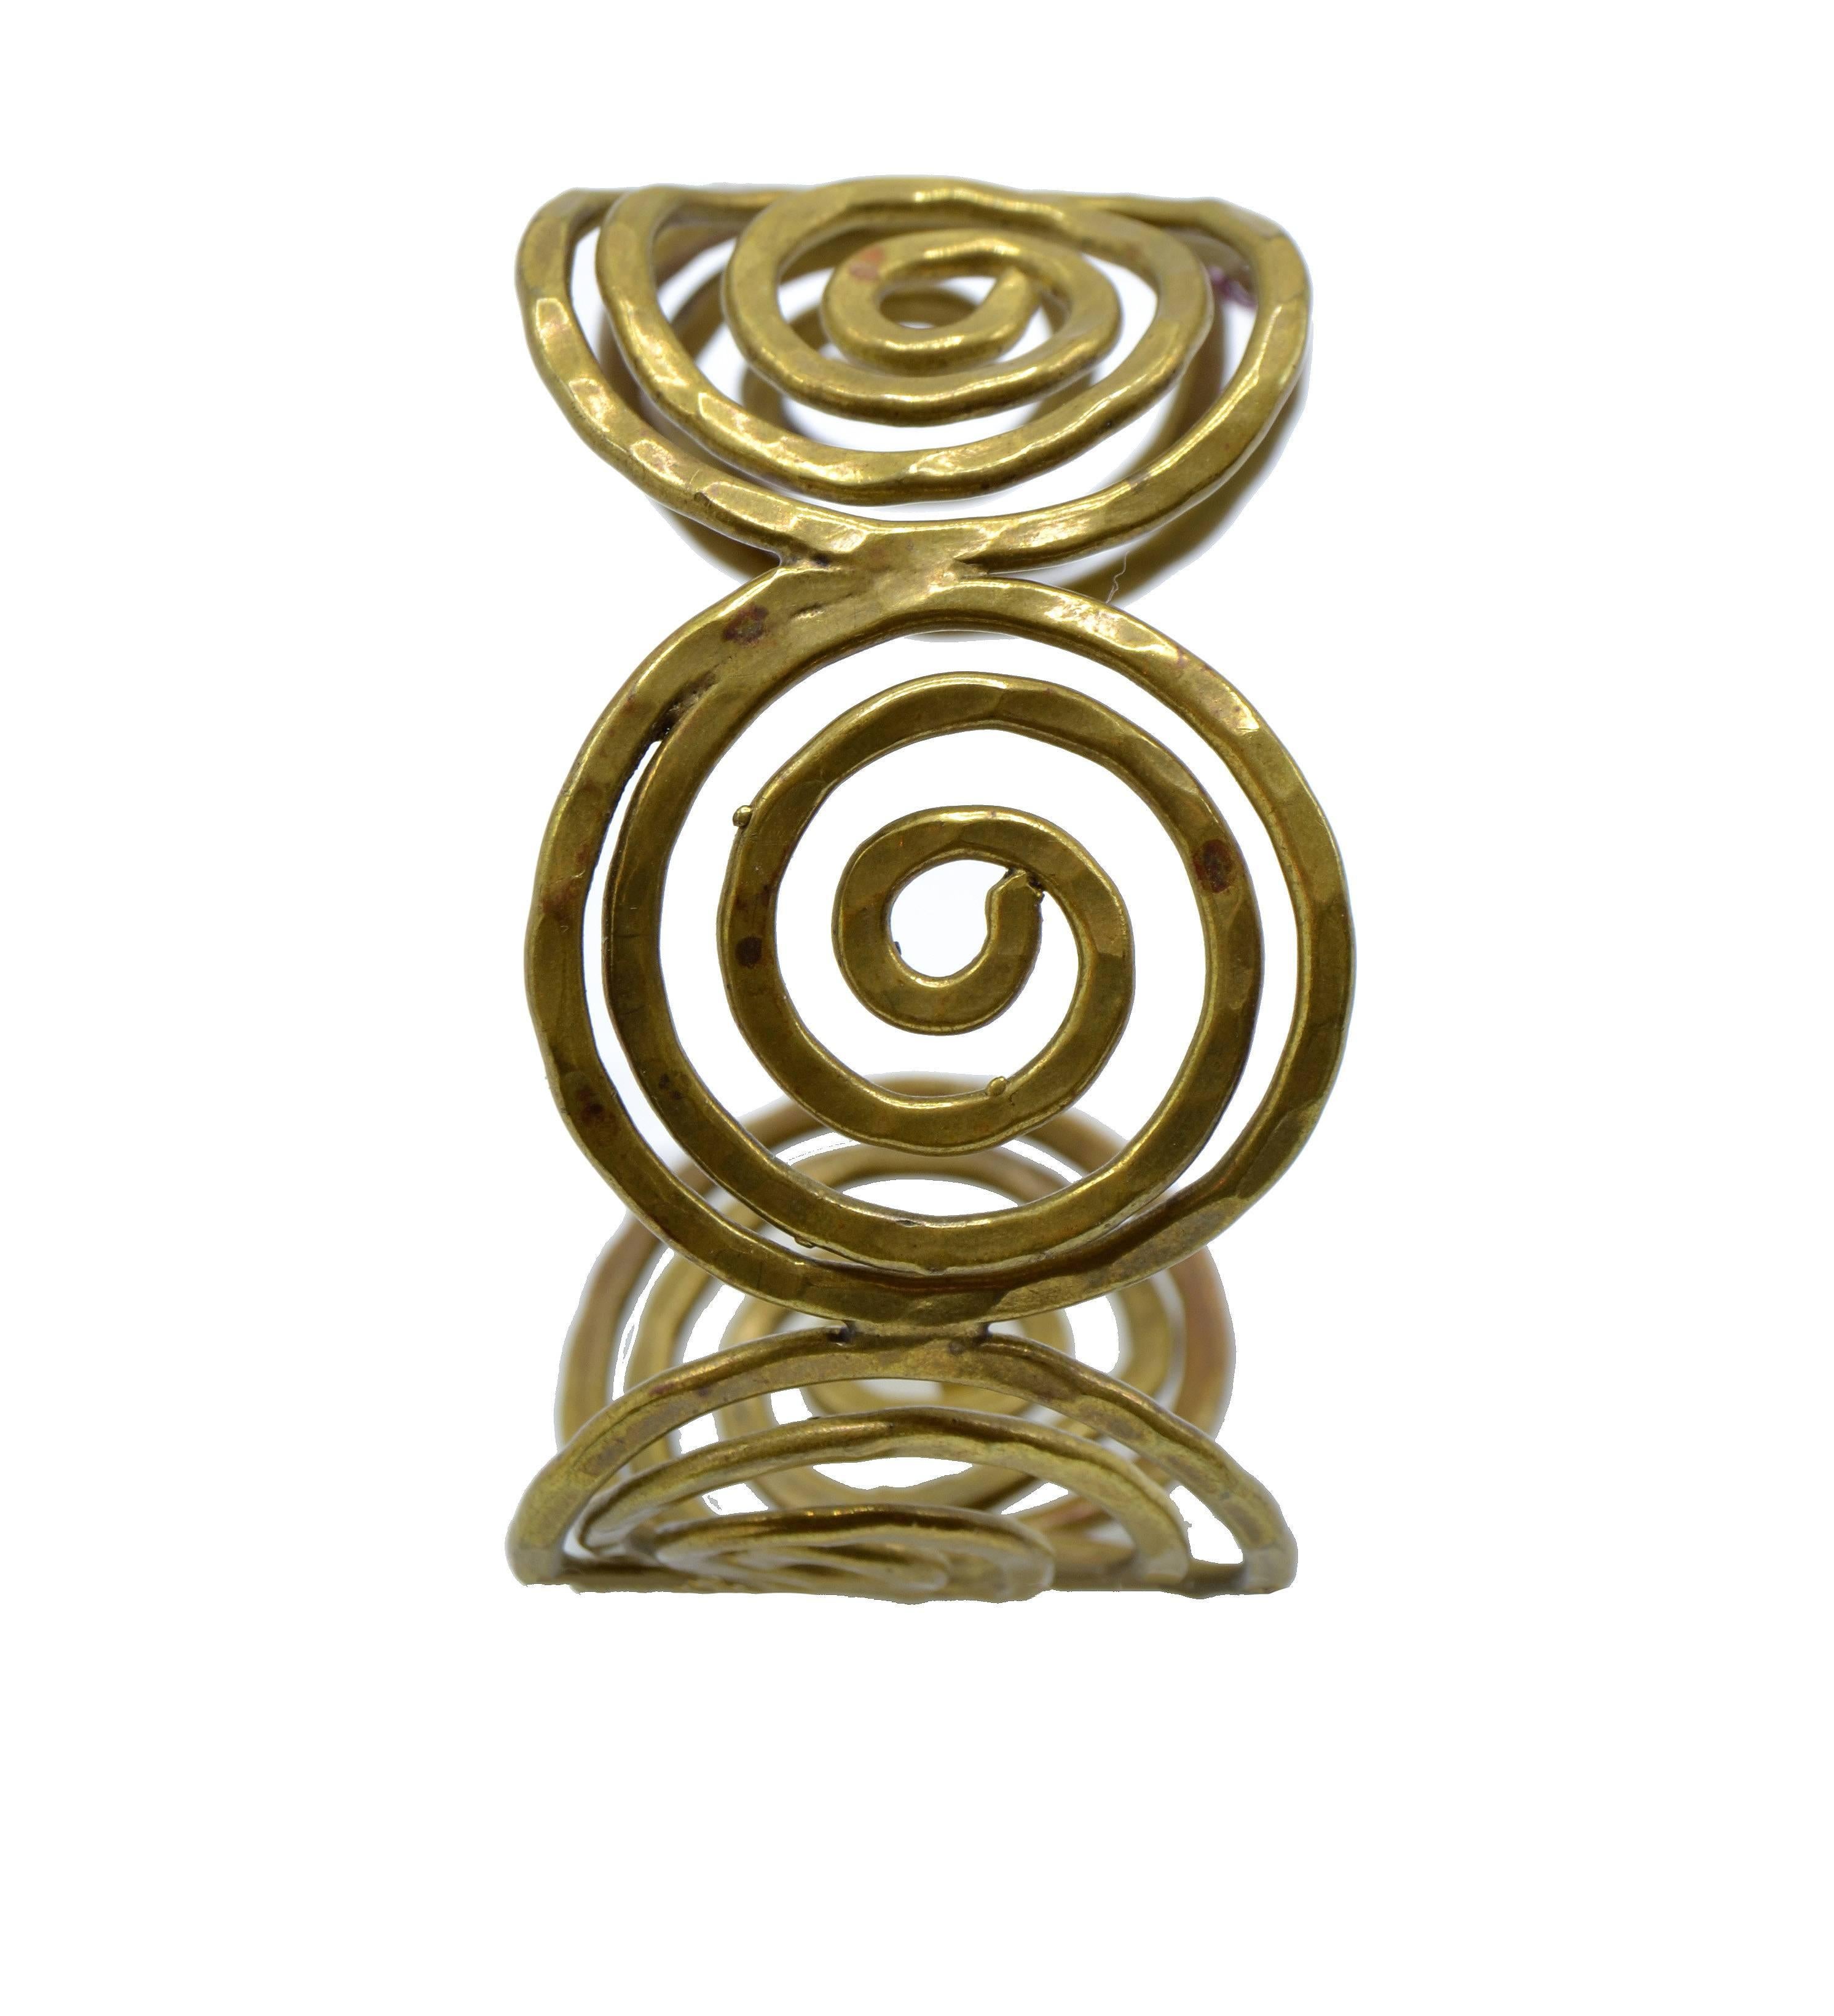 Greek key style cuff made out of brass.
Stunning piece of art.